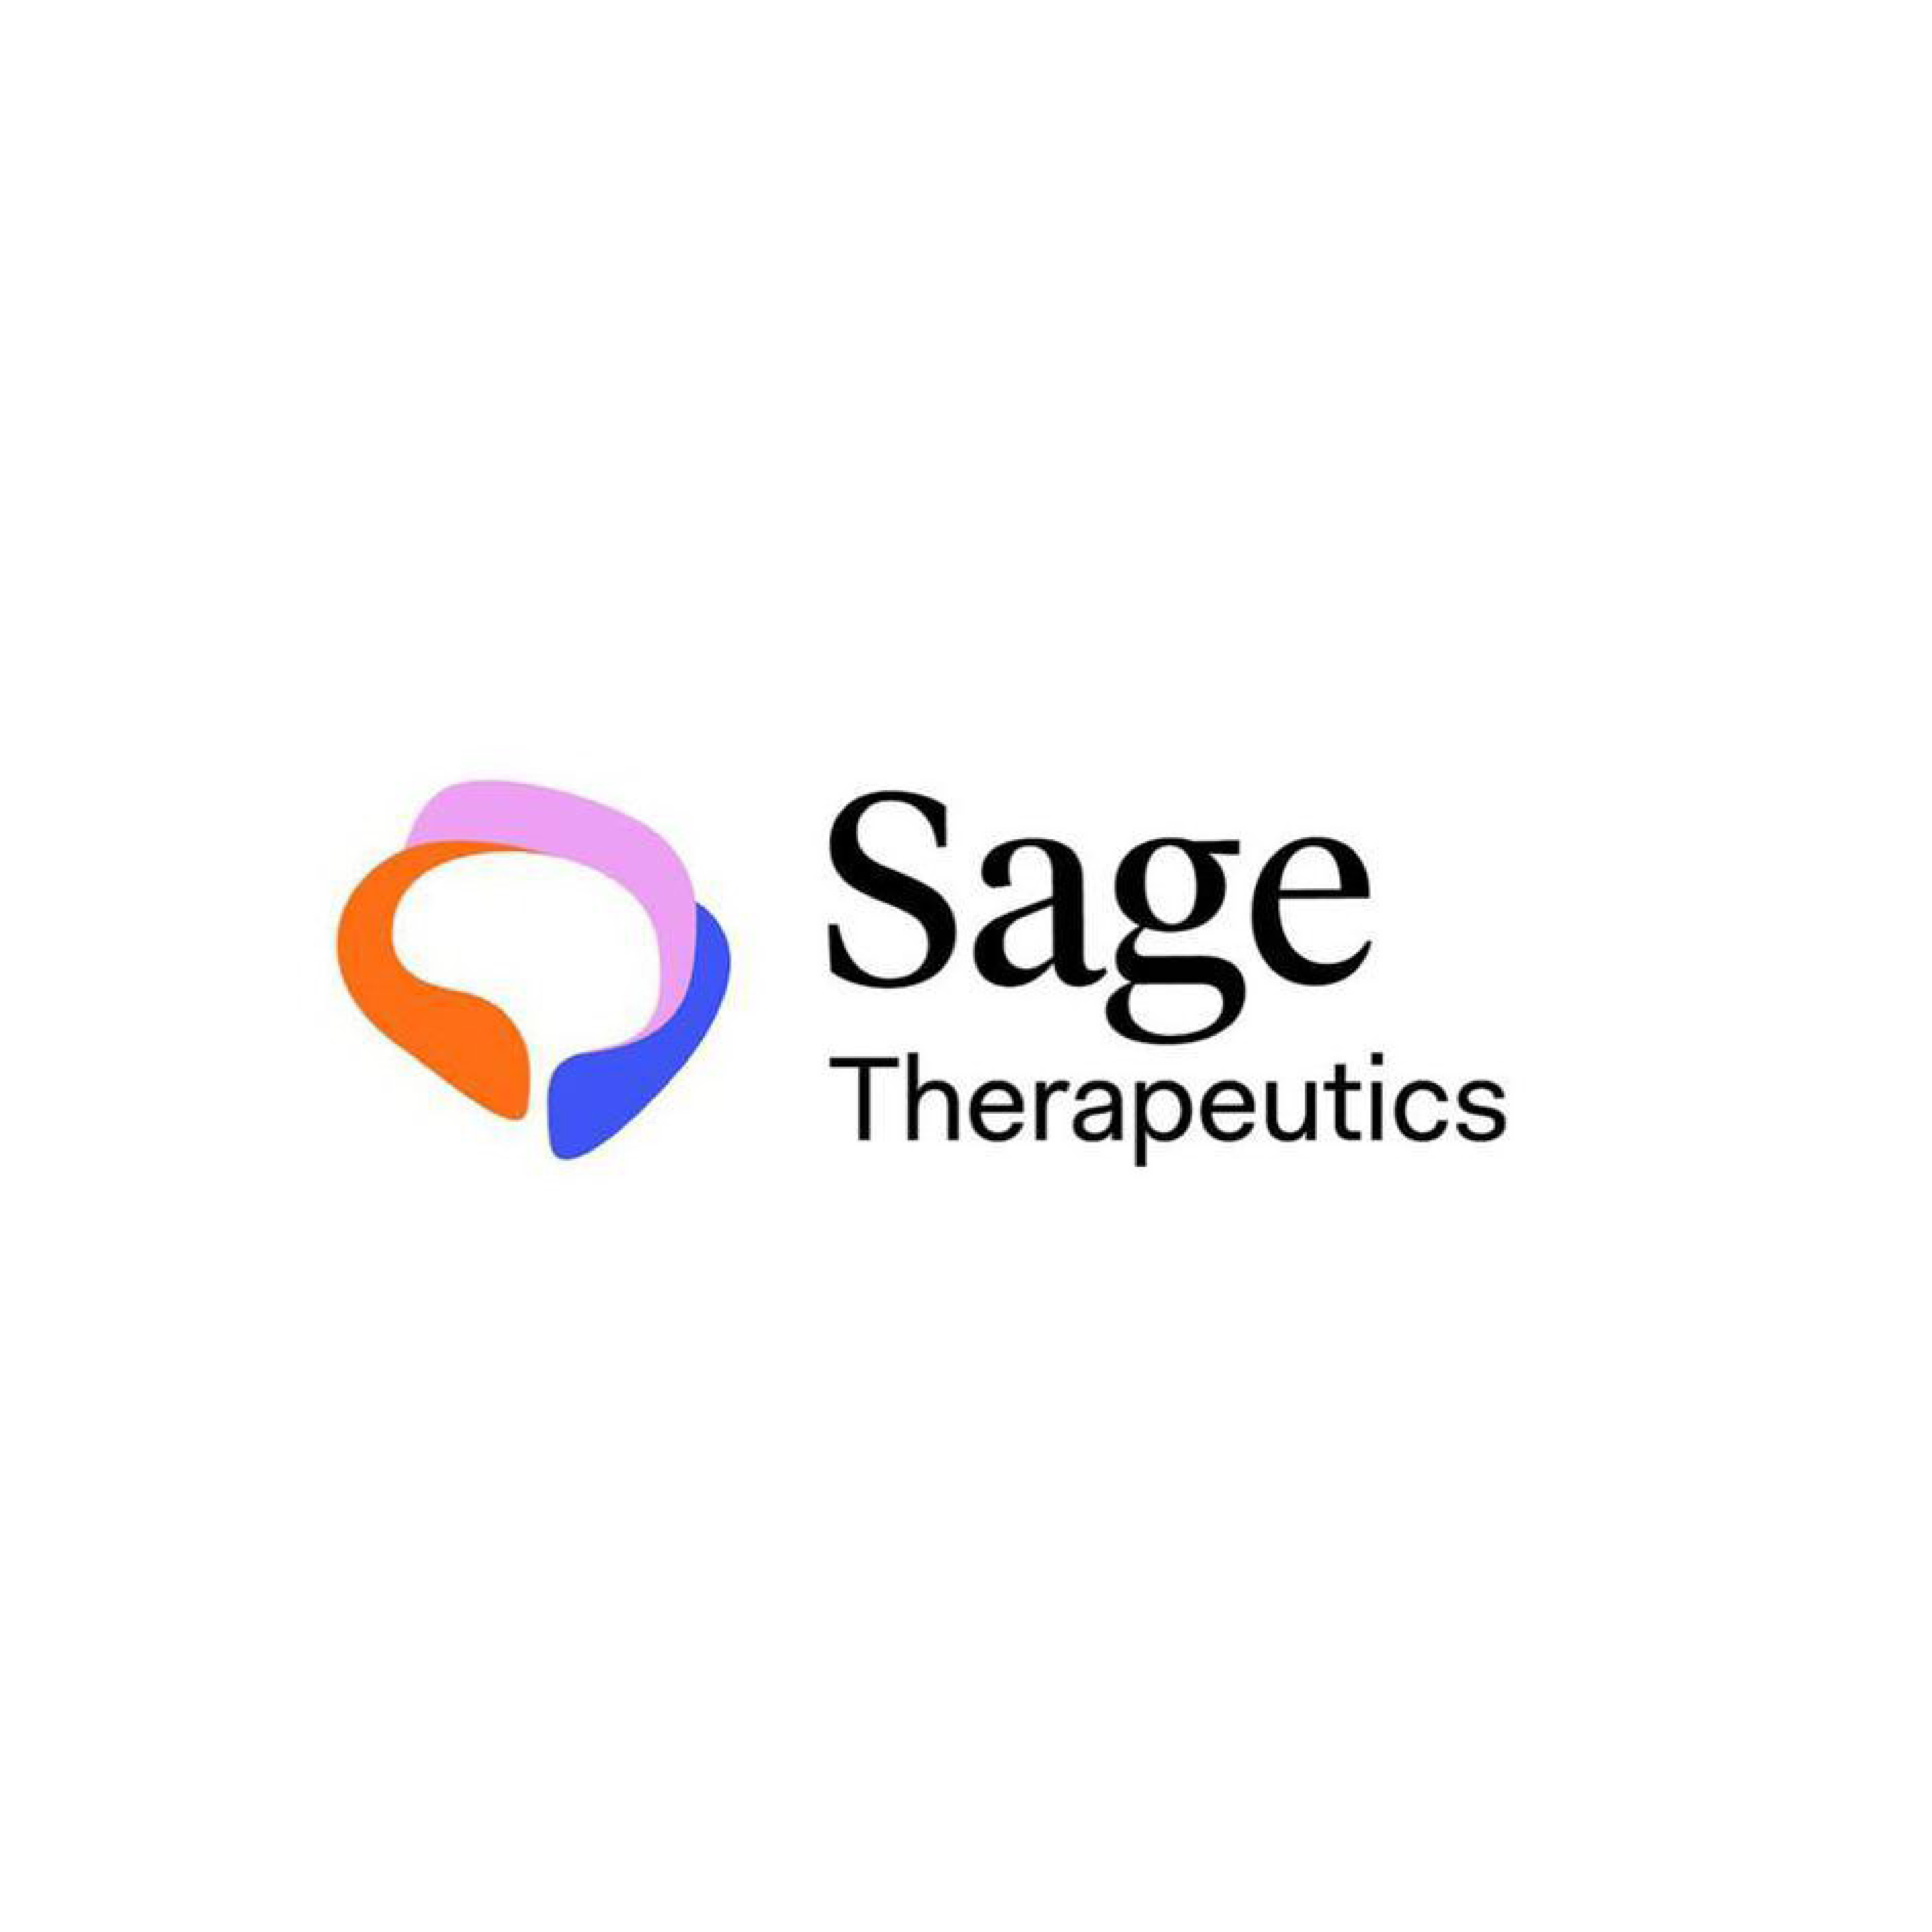 Sage Therapeutics logo